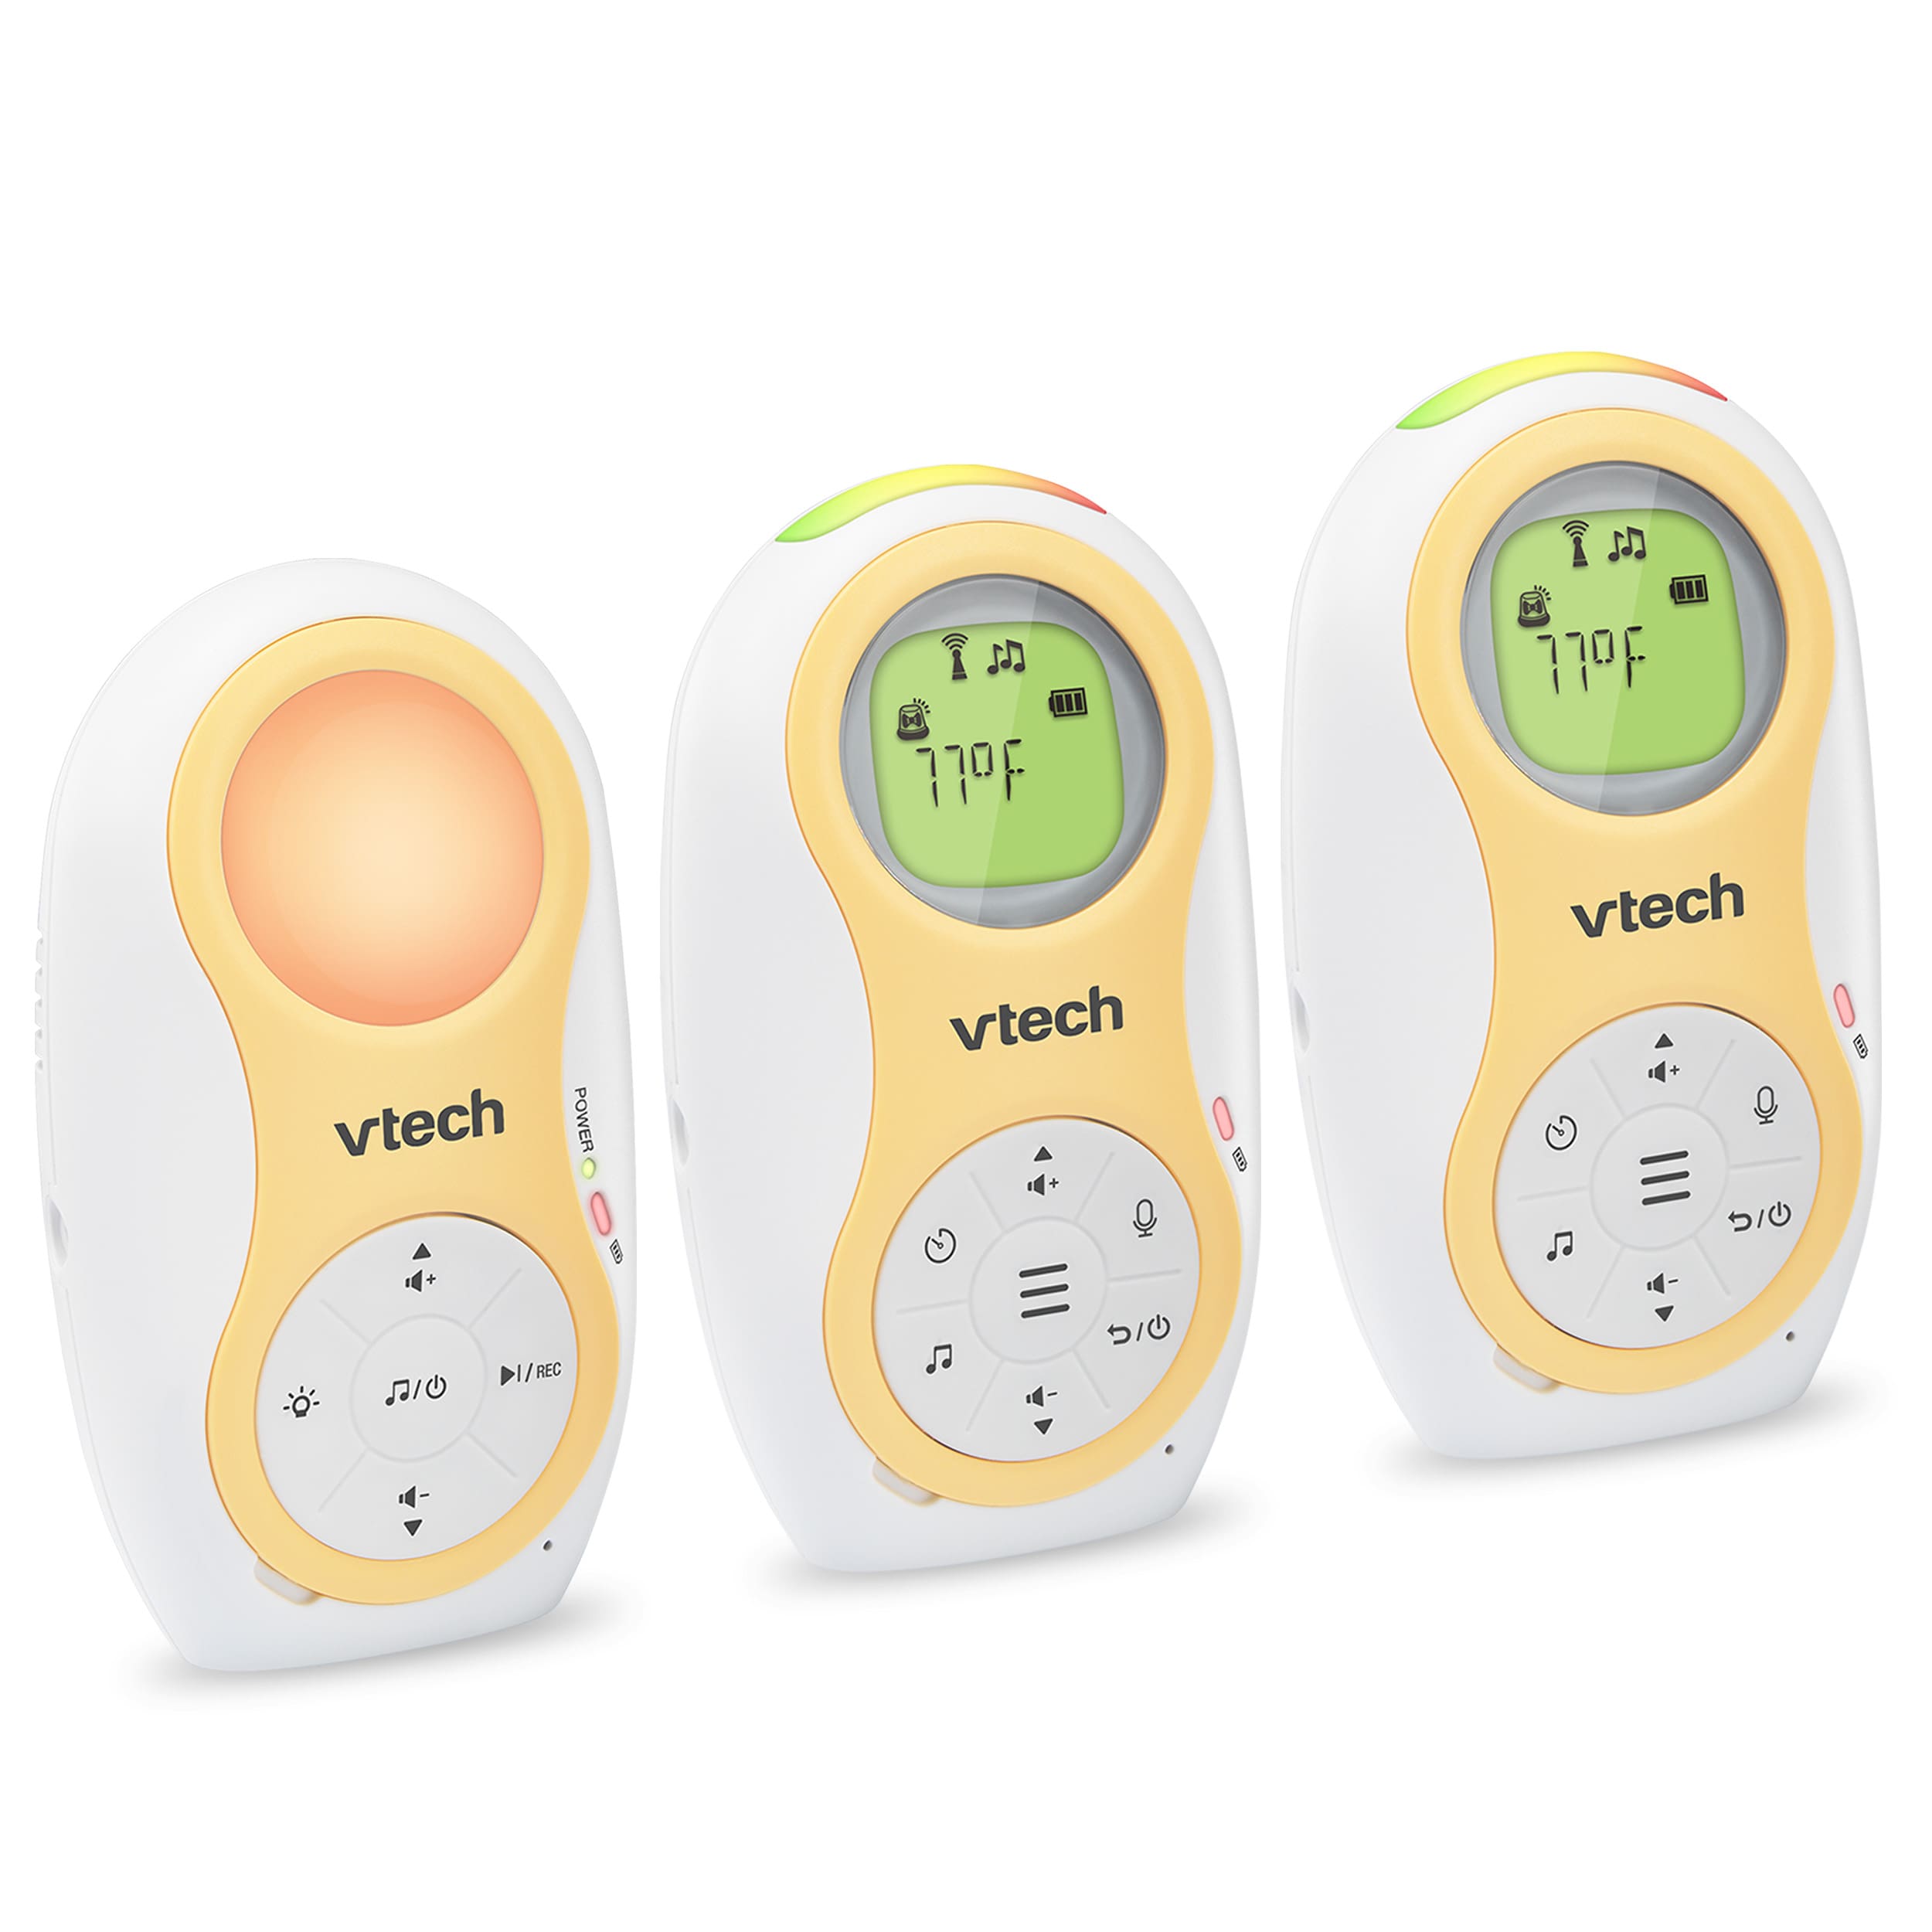 2 Parent Unit Enhanced Range Digital Audio Baby Monitor with Night Light - view 3